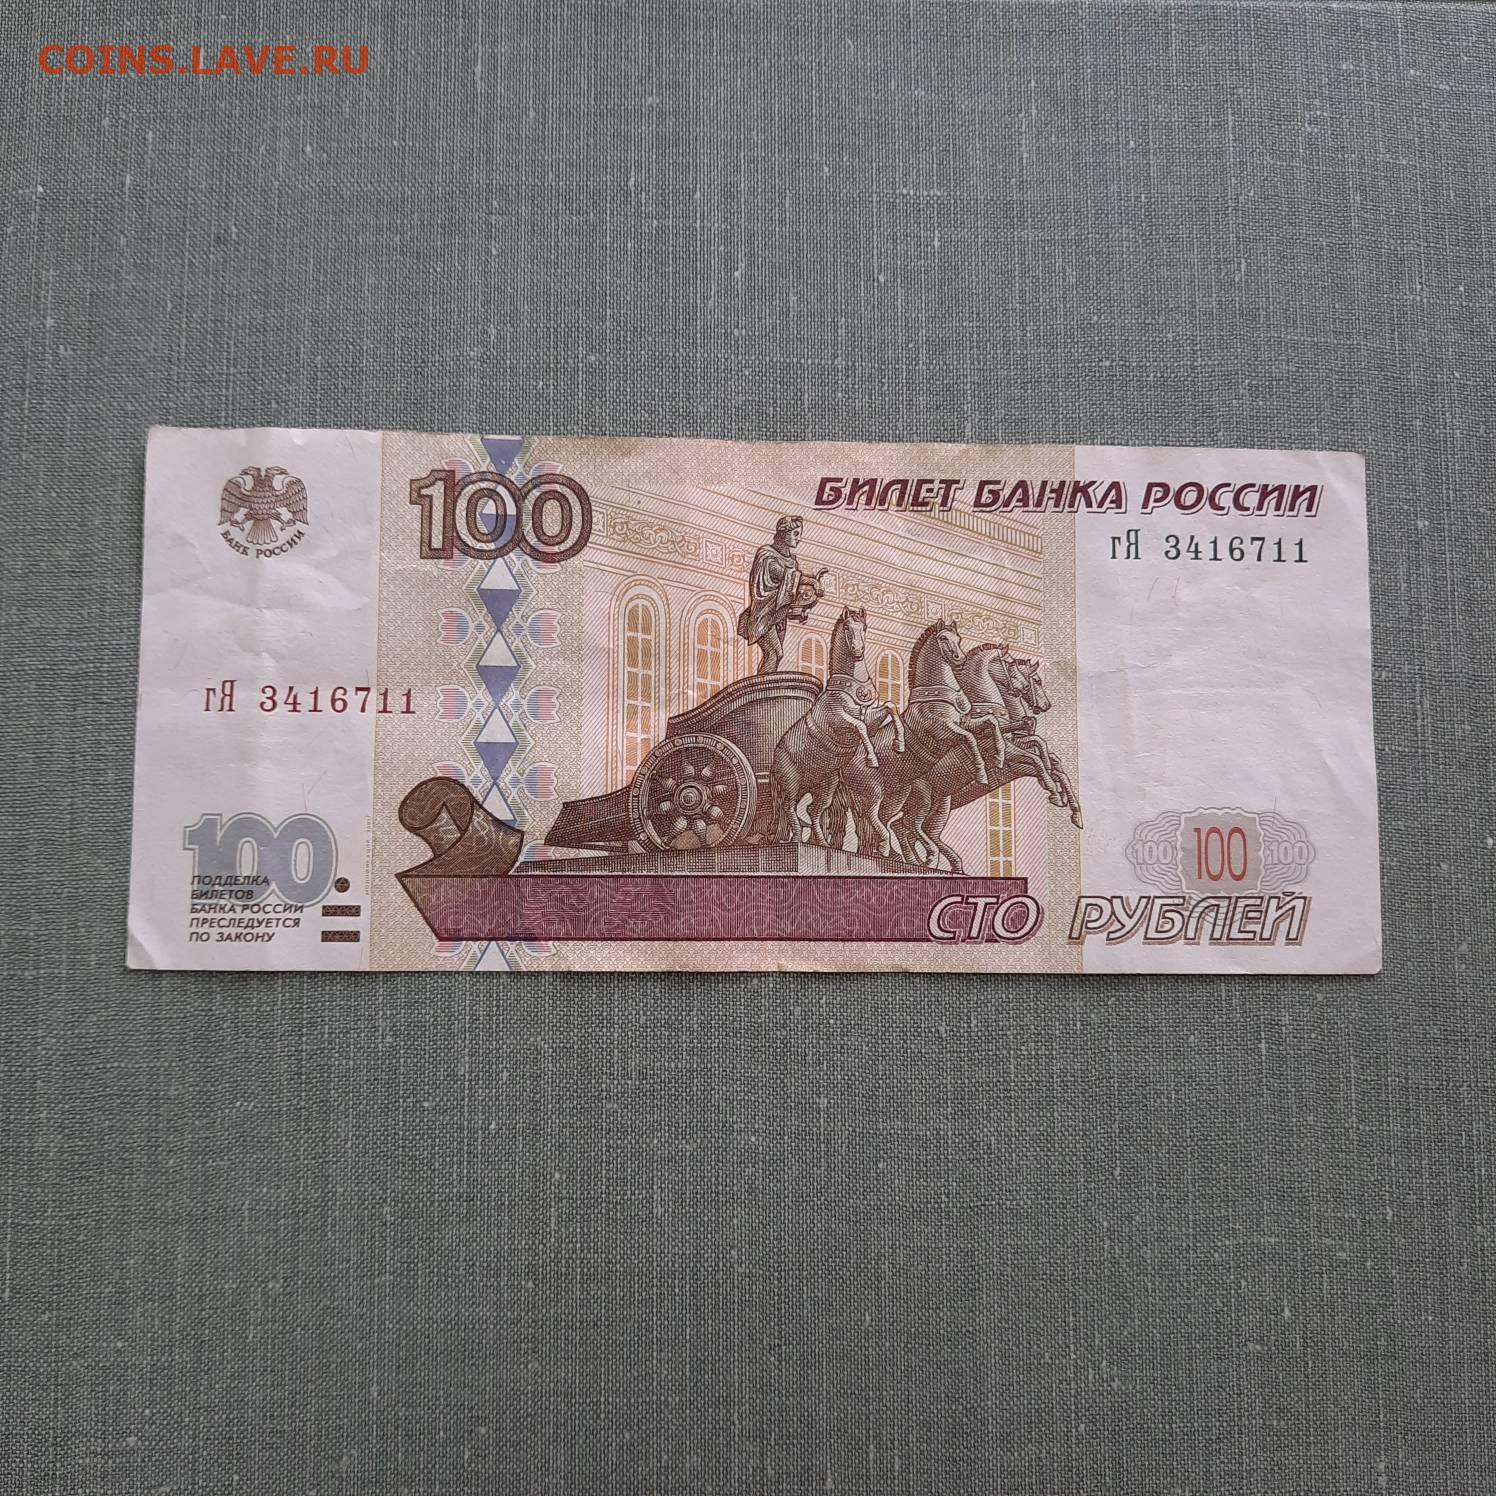 26 500 рублей. СТО рублей модификация 2001. 100 Рублей модификация 2001. 100 Рублей 1997. 10 Рублей модификация 2001.